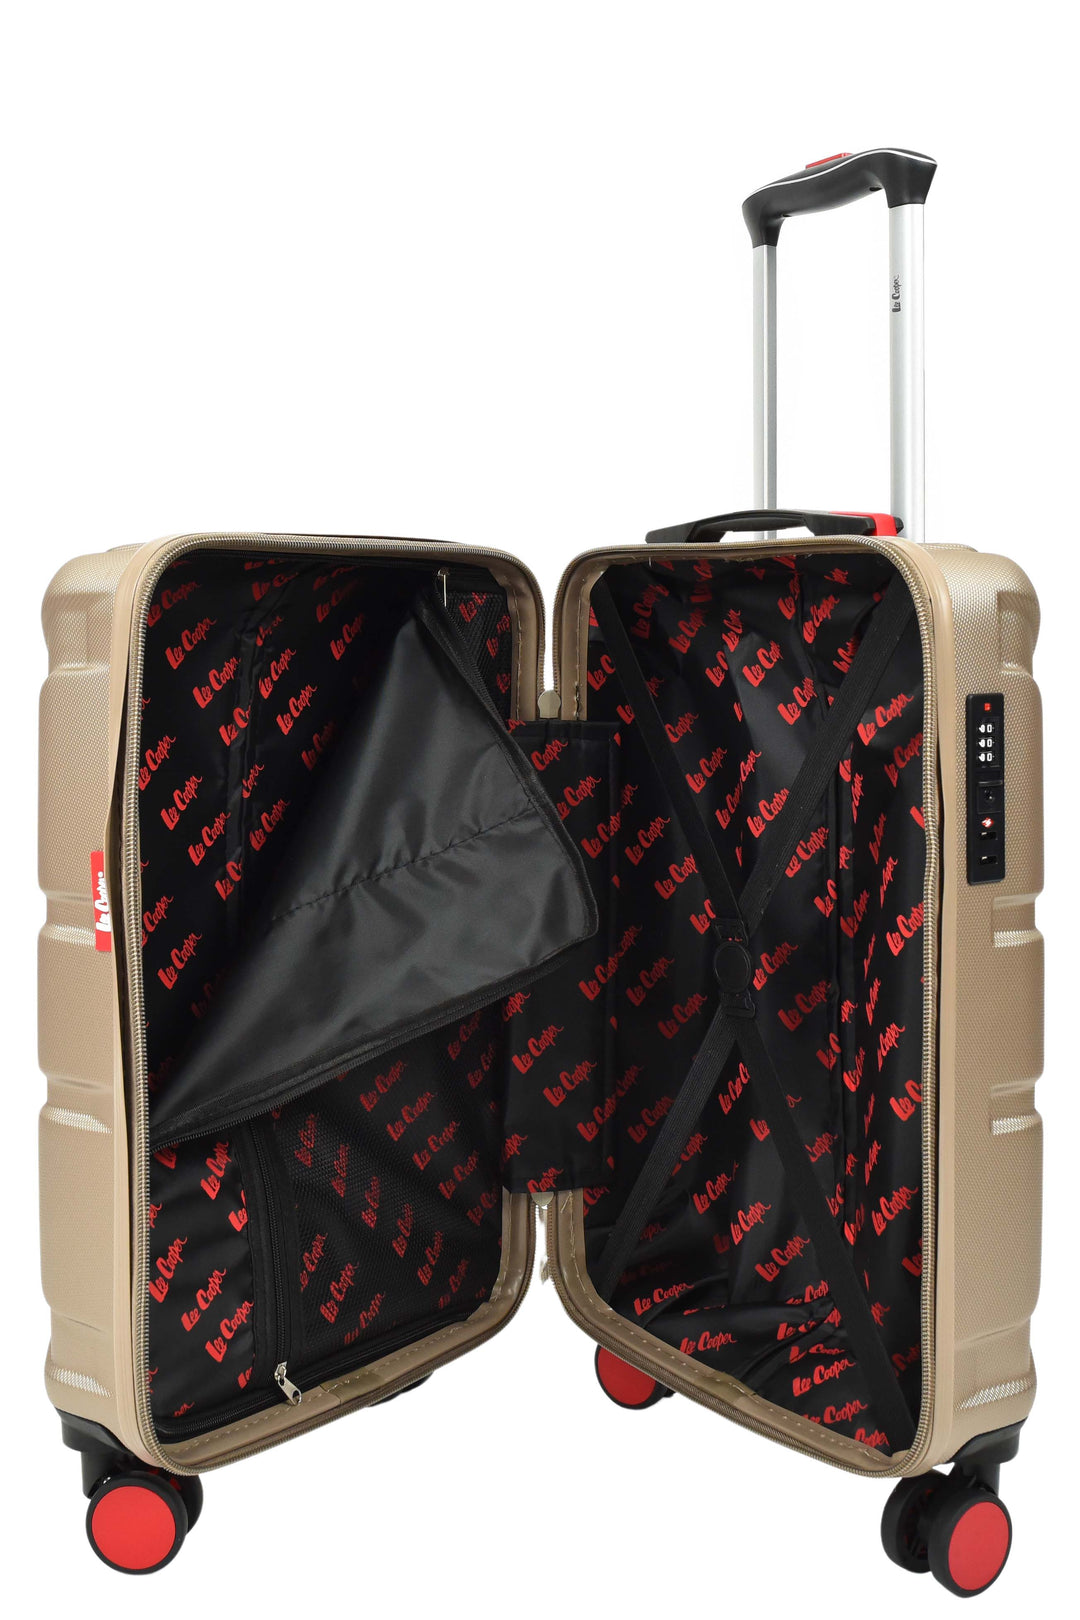 Lee Cooper Union Jack Suitcase 15